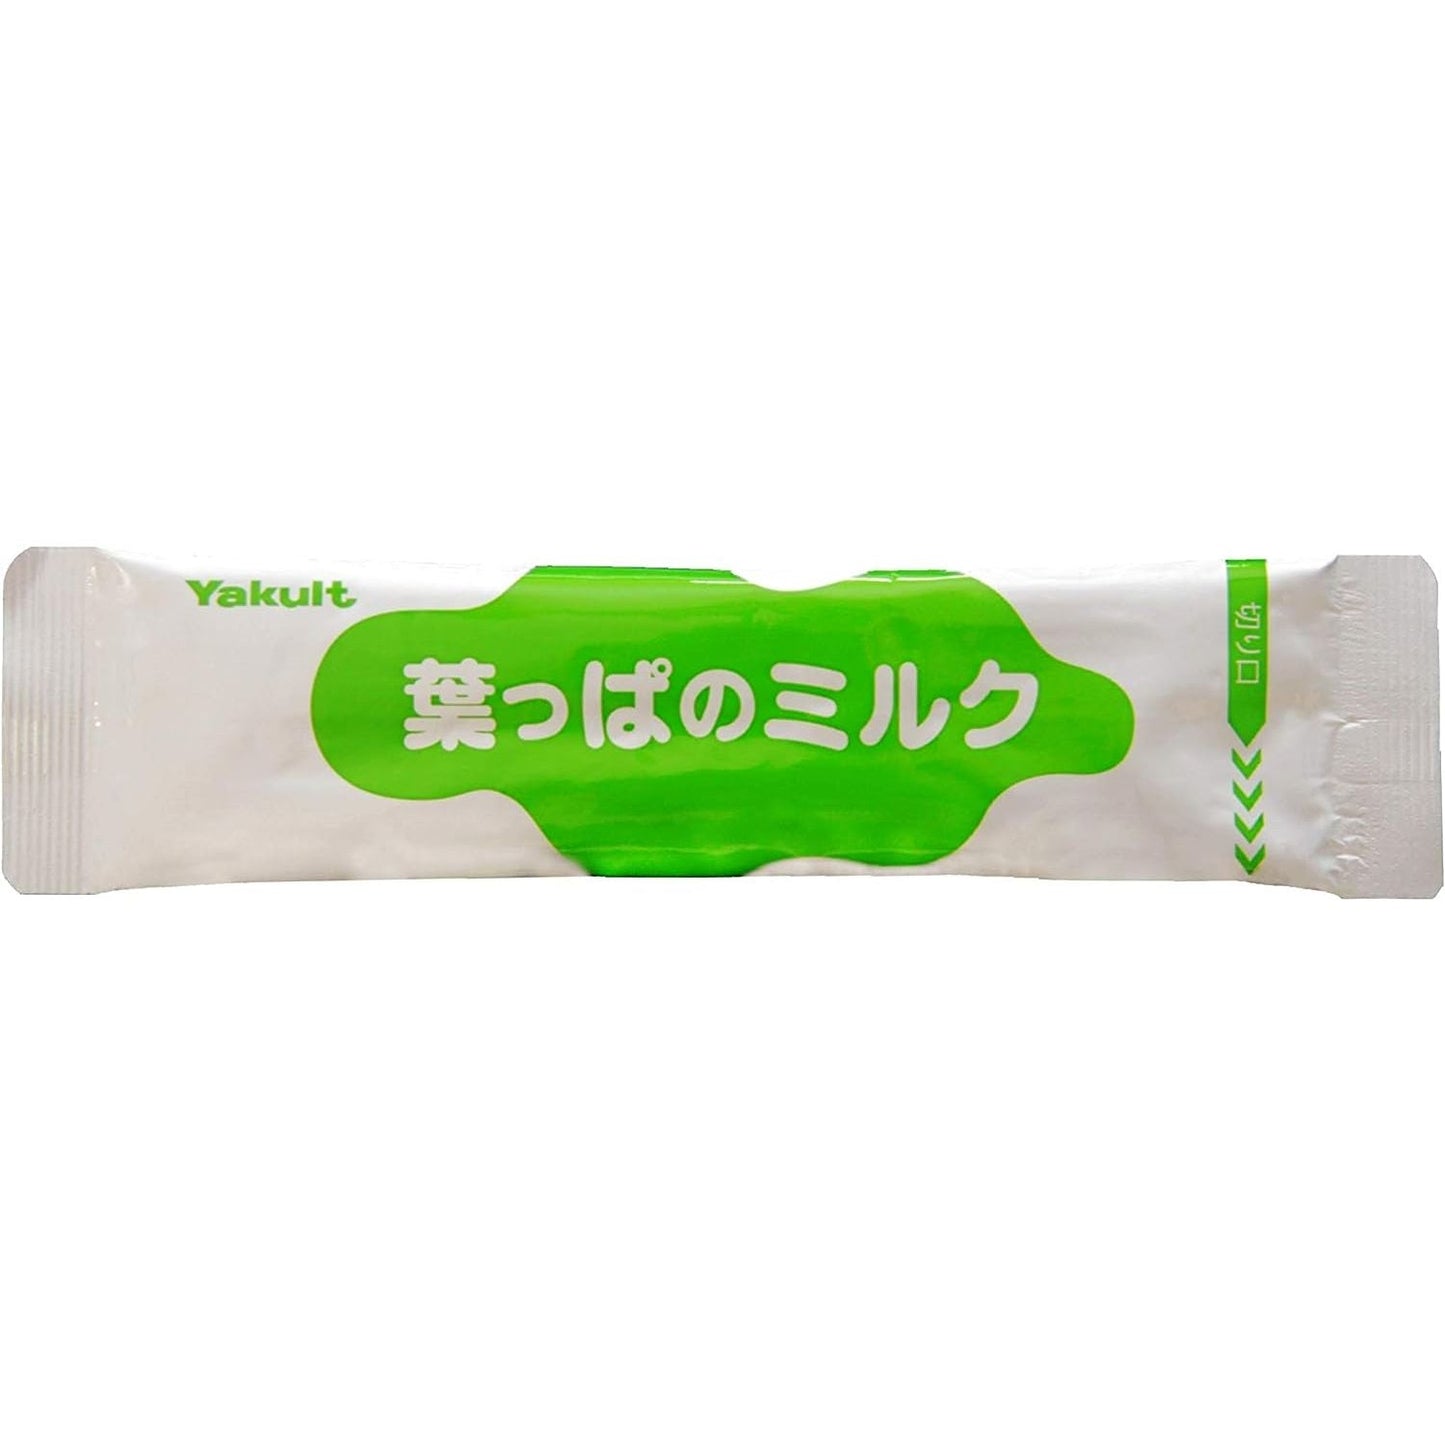 Yakult養樂多 豆乳青汁 7g×20袋 - CosmeBear小熊日本藥妝For台灣